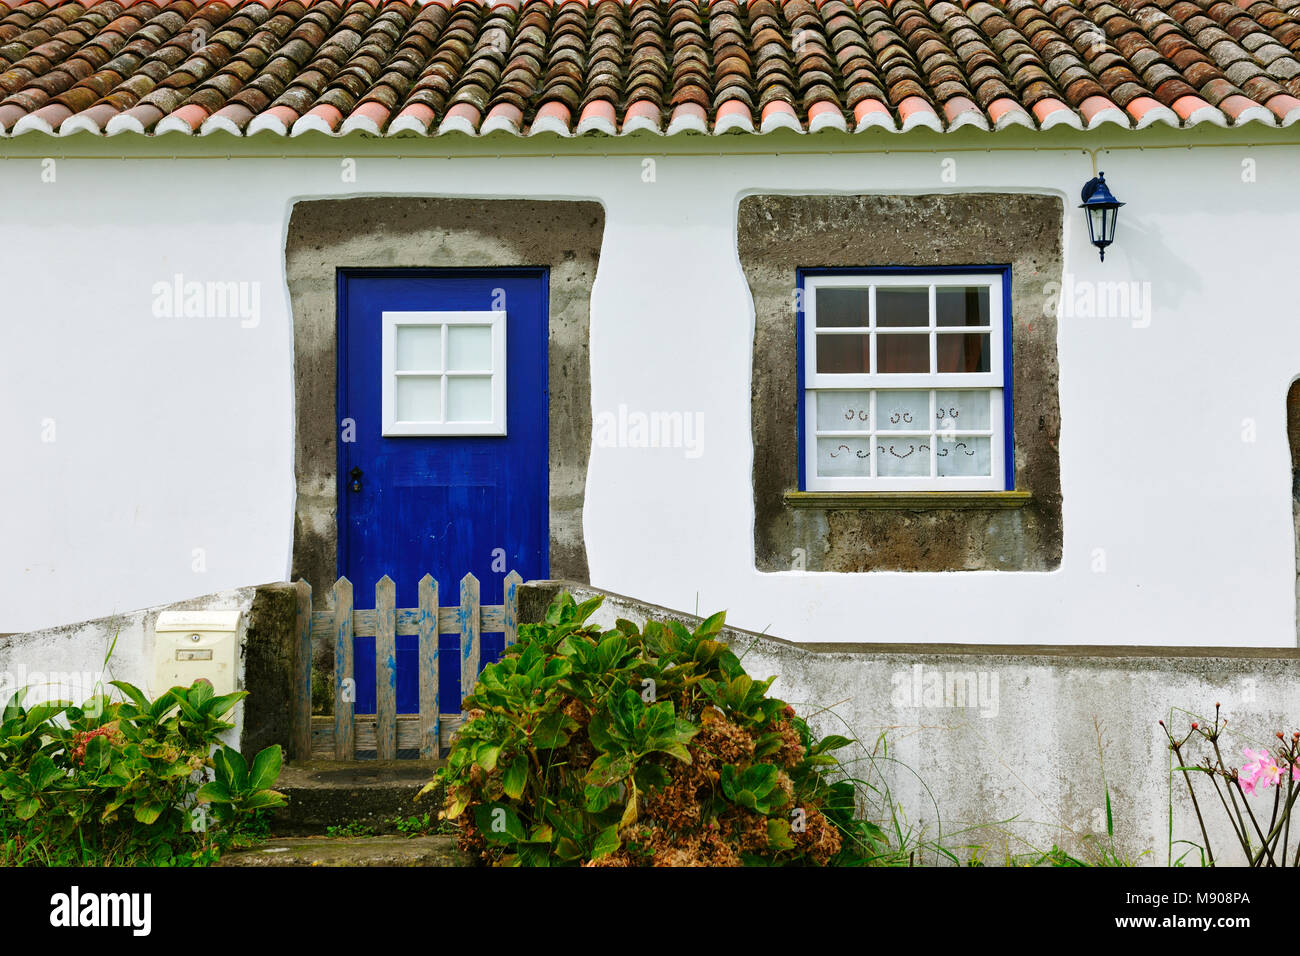 Maison traditionnelle de São Brás. Terceira, Açores, Portugal Banque D'Images